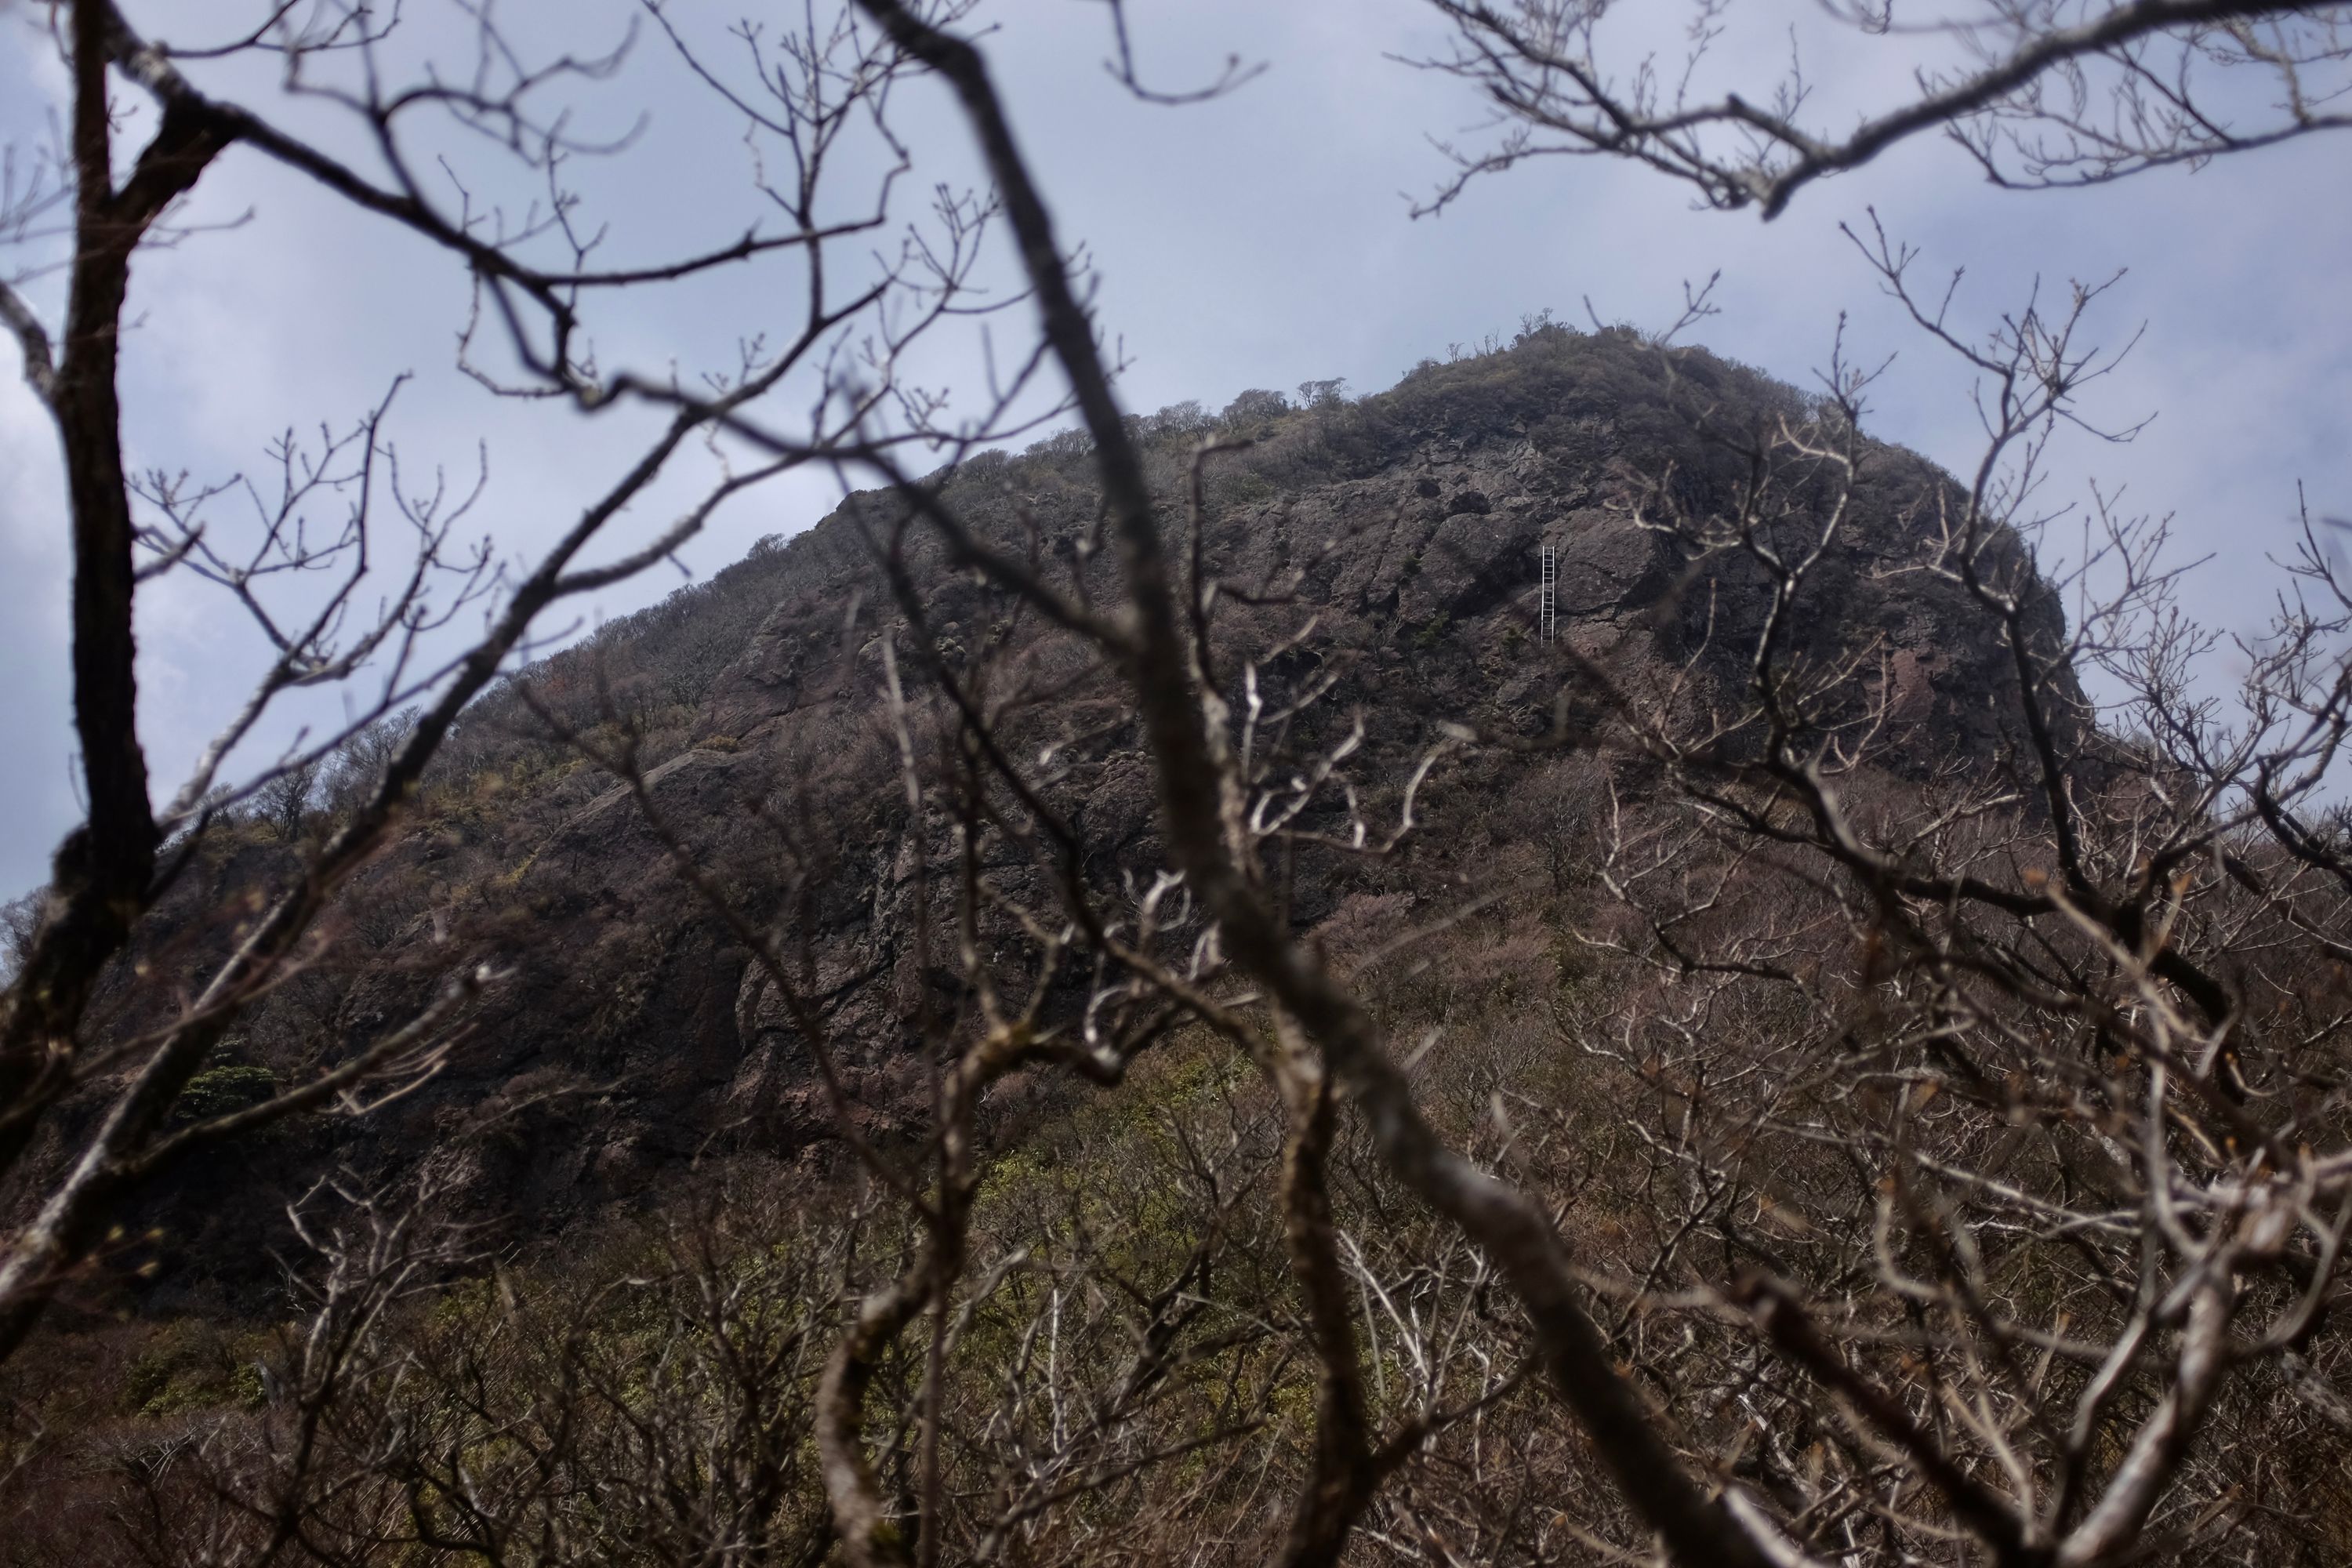 A steep rock wall visible through branches.